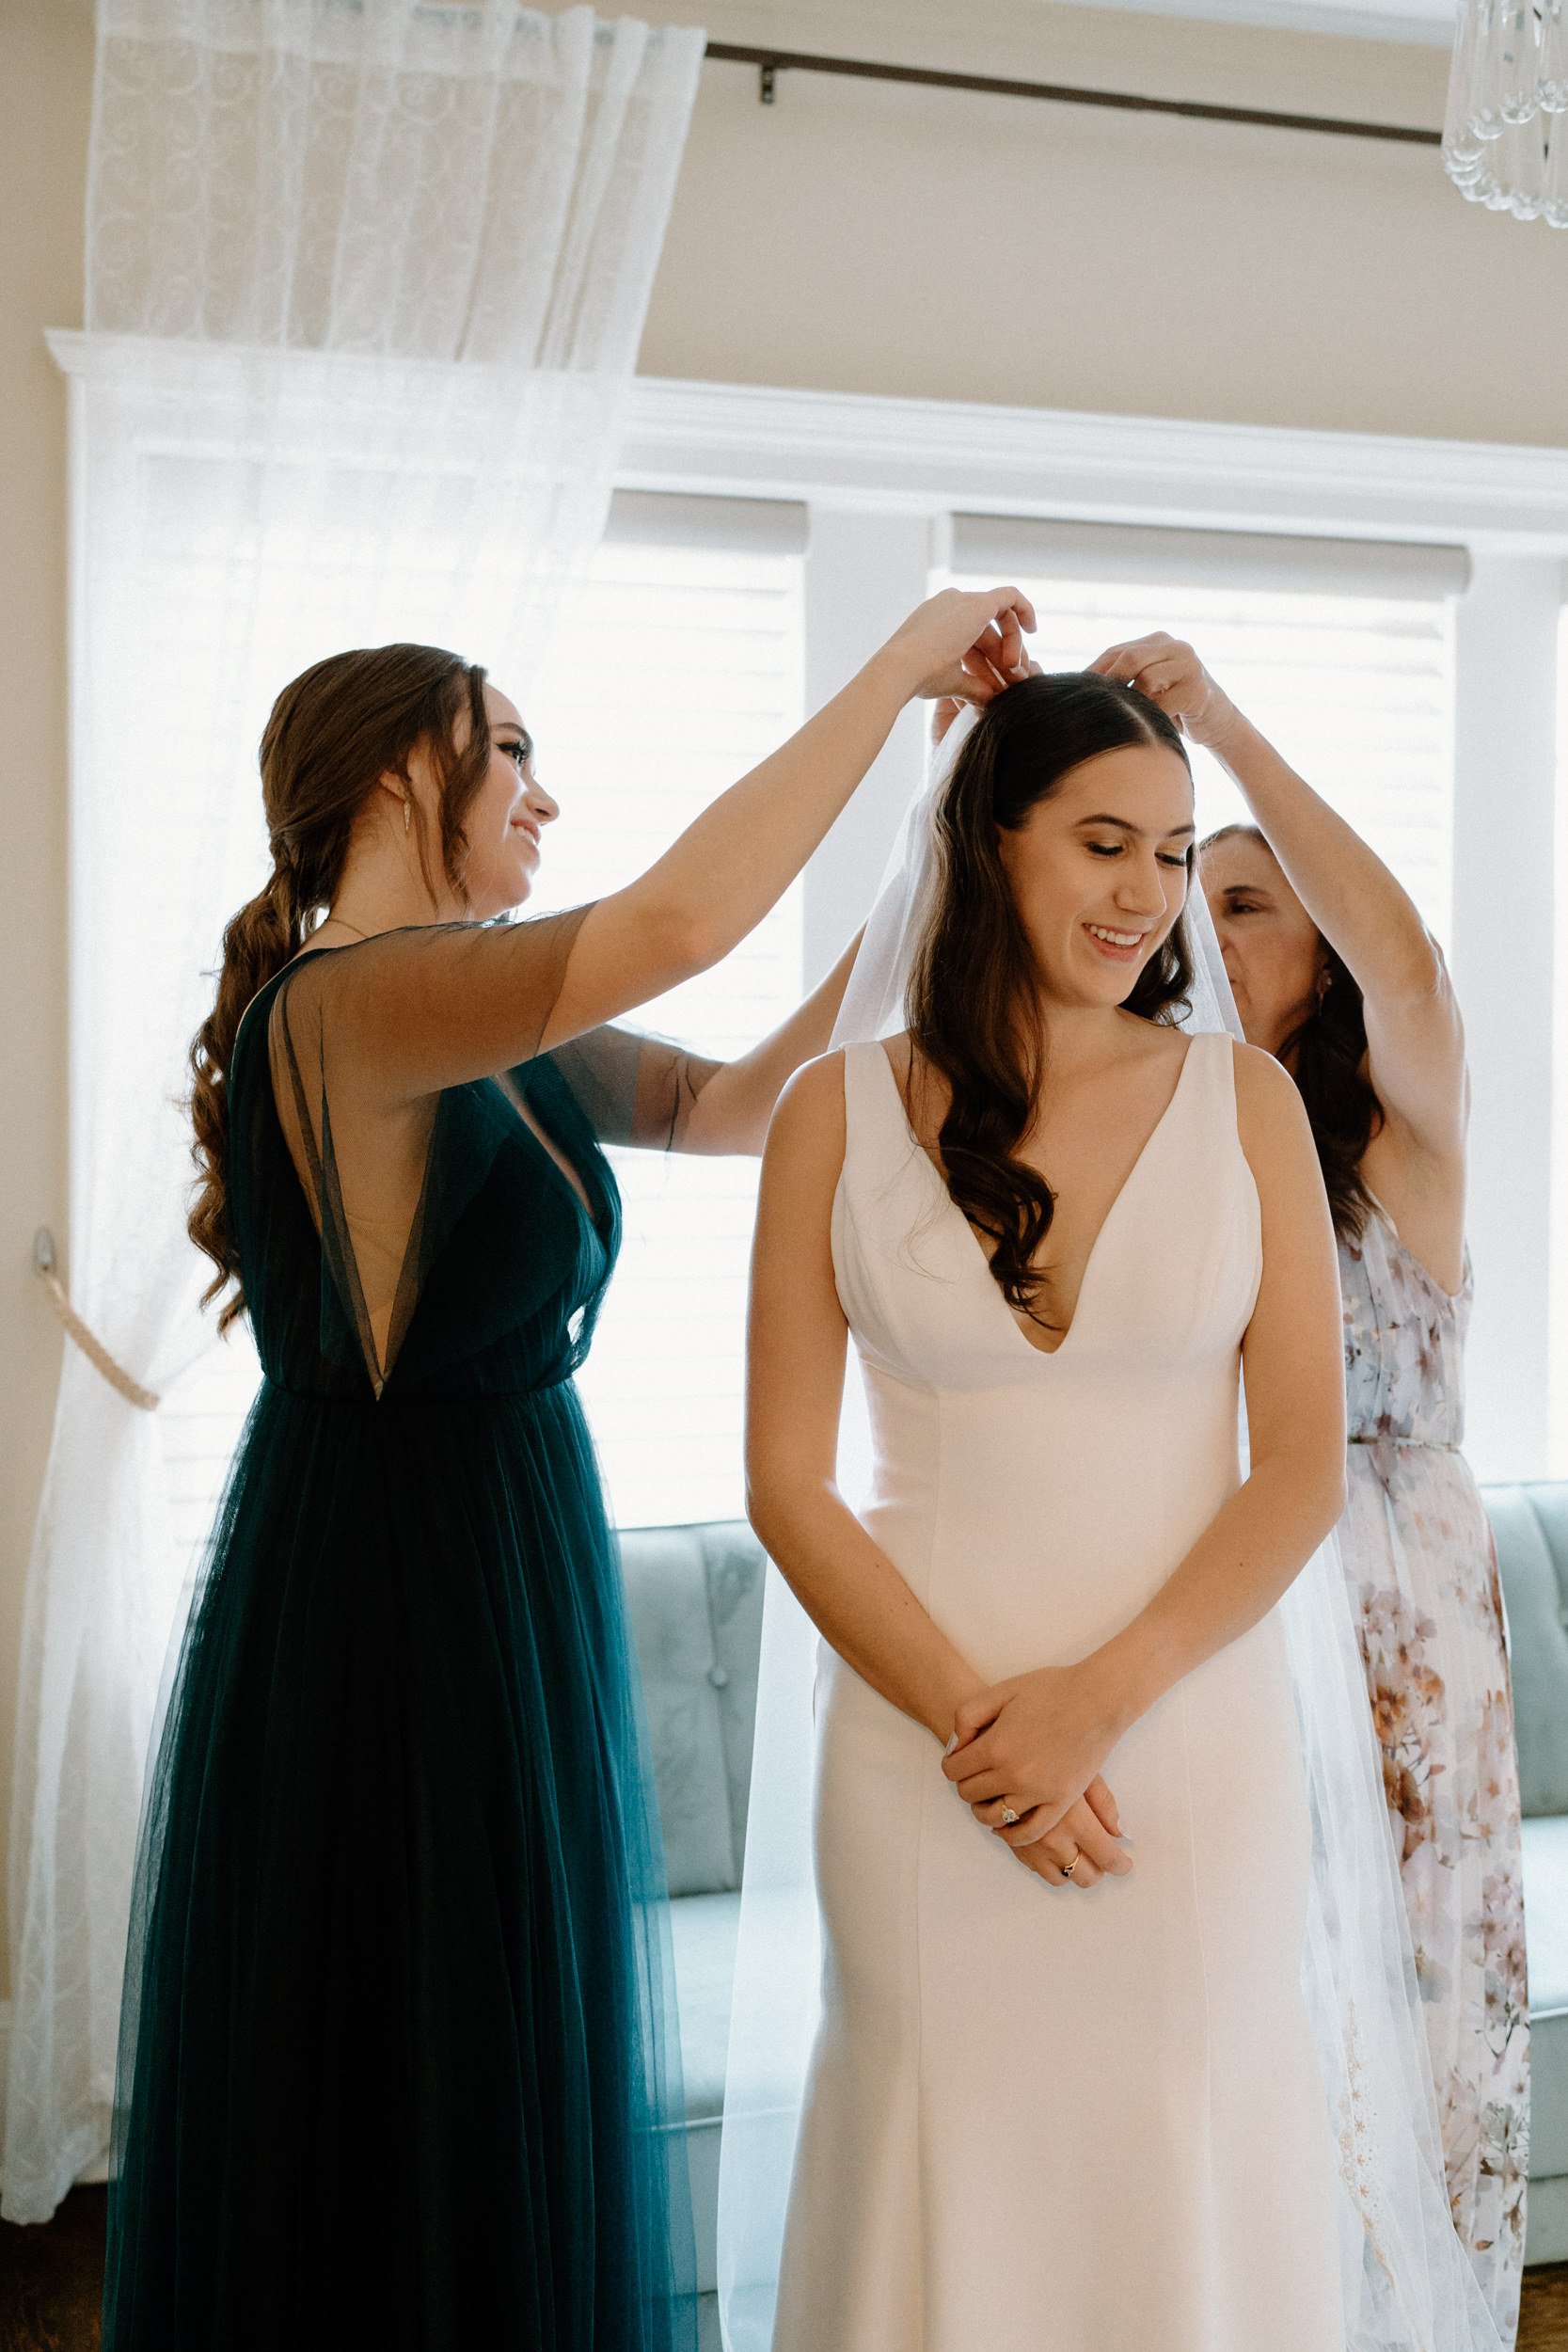 Bridesmaids help adjust the bride's veil